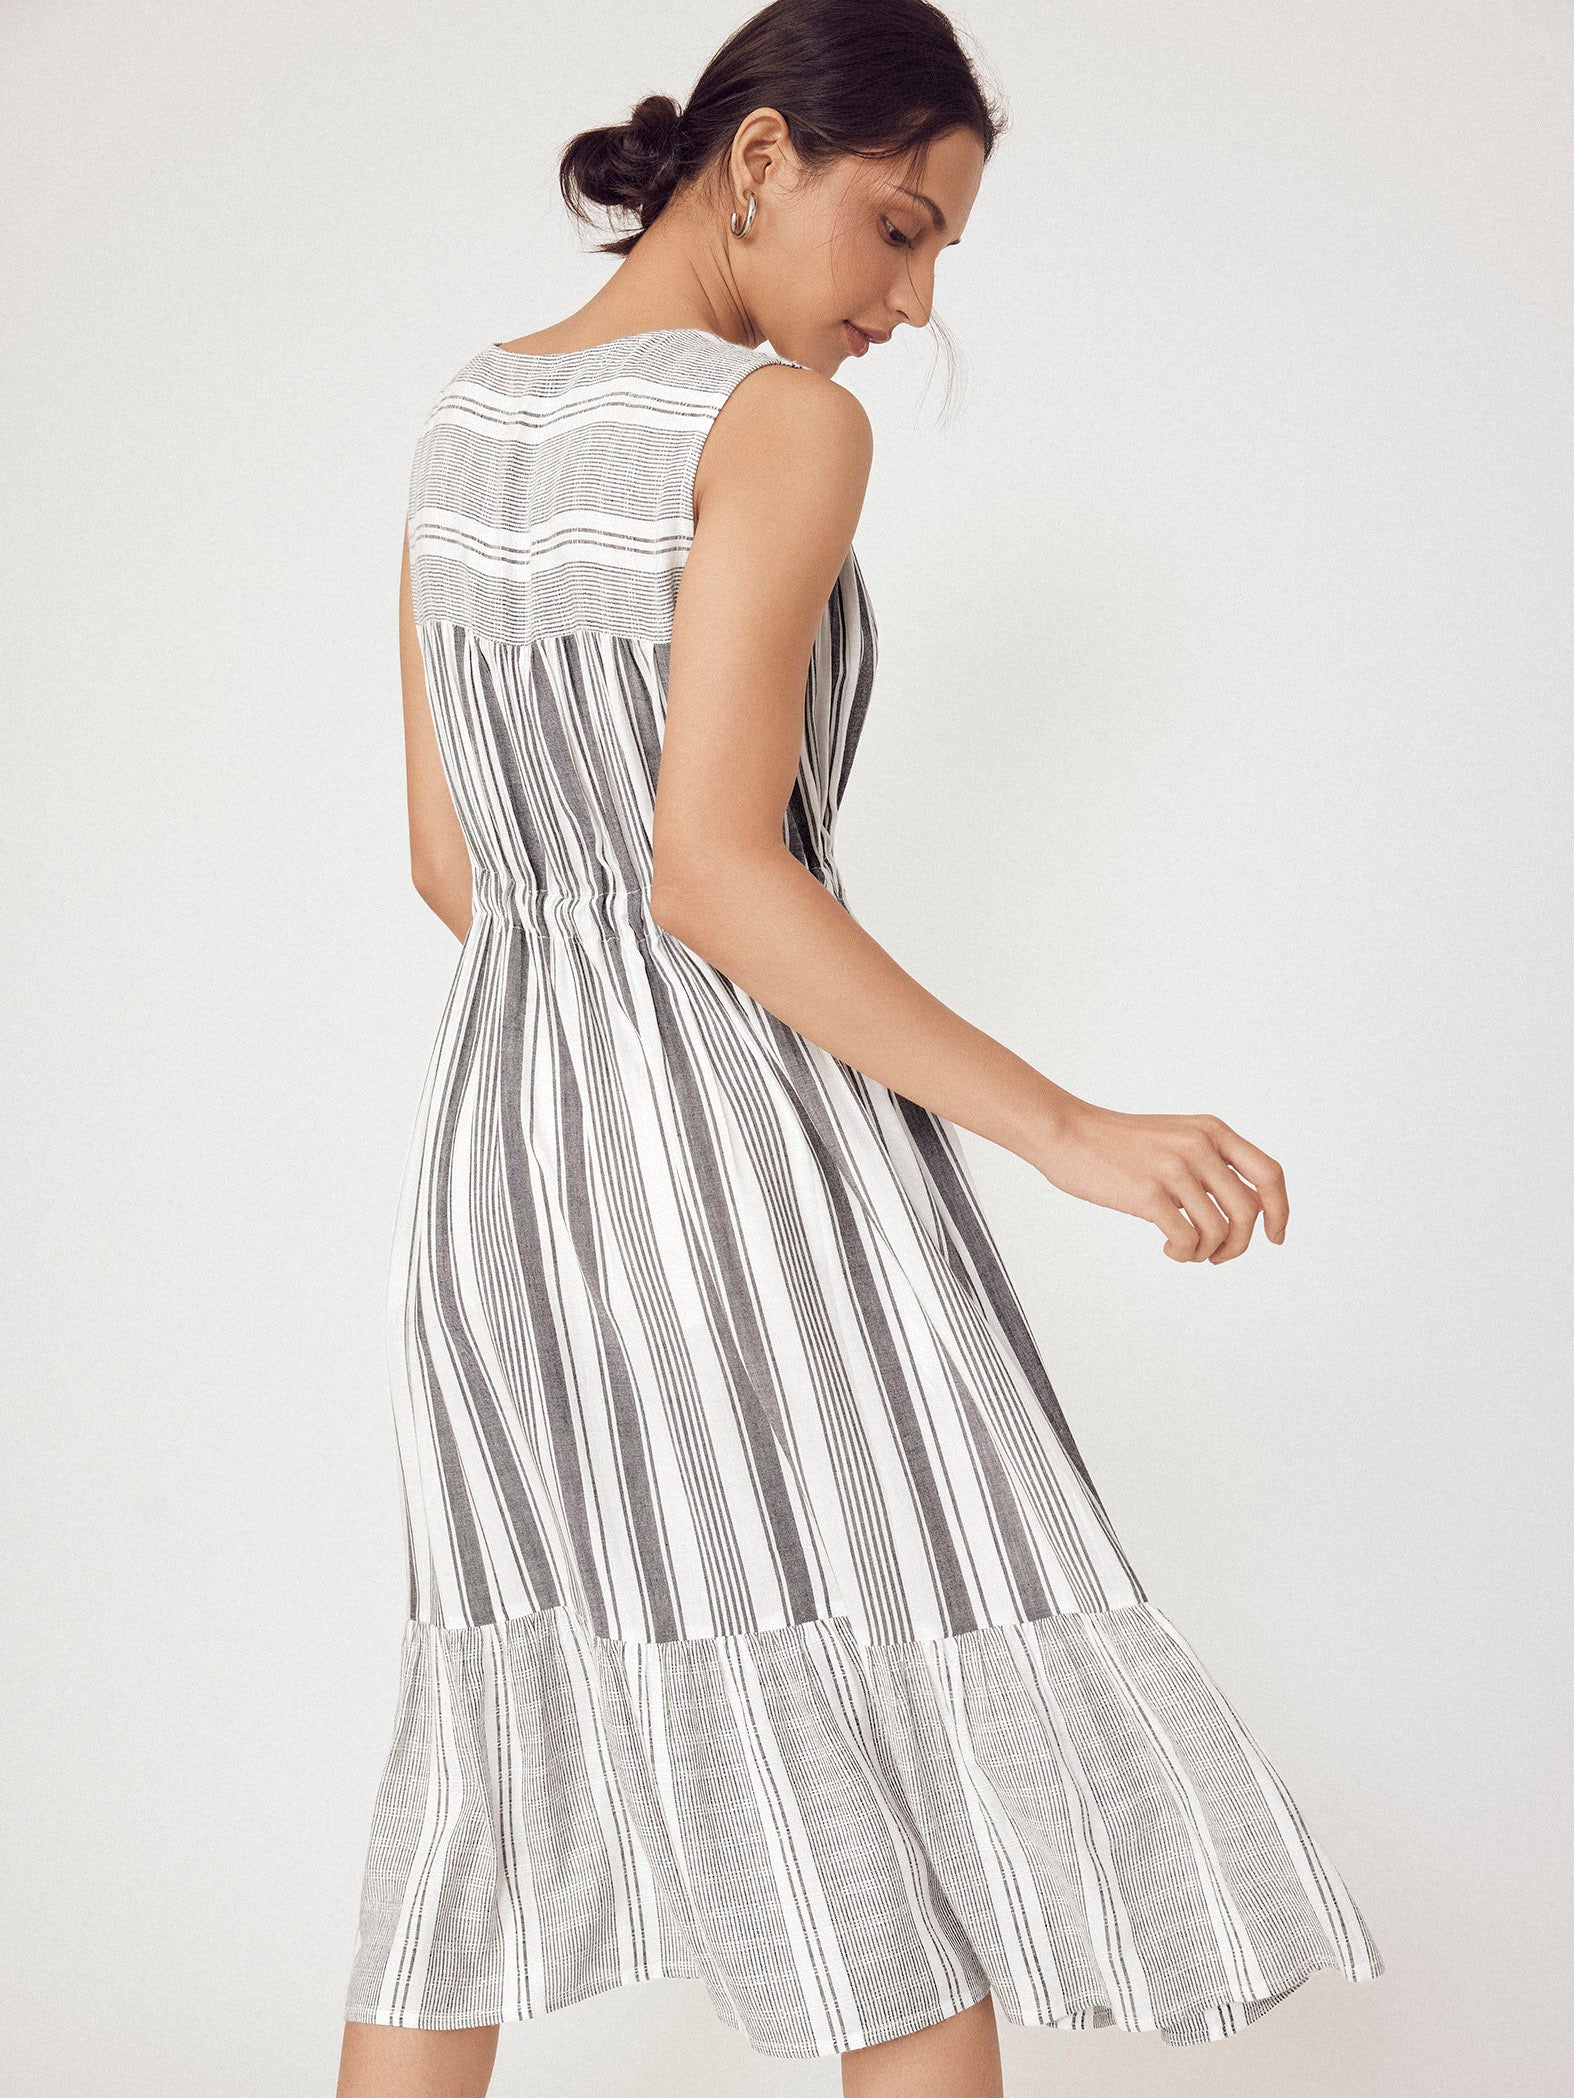 Monochrome Striped Front Tie Dress